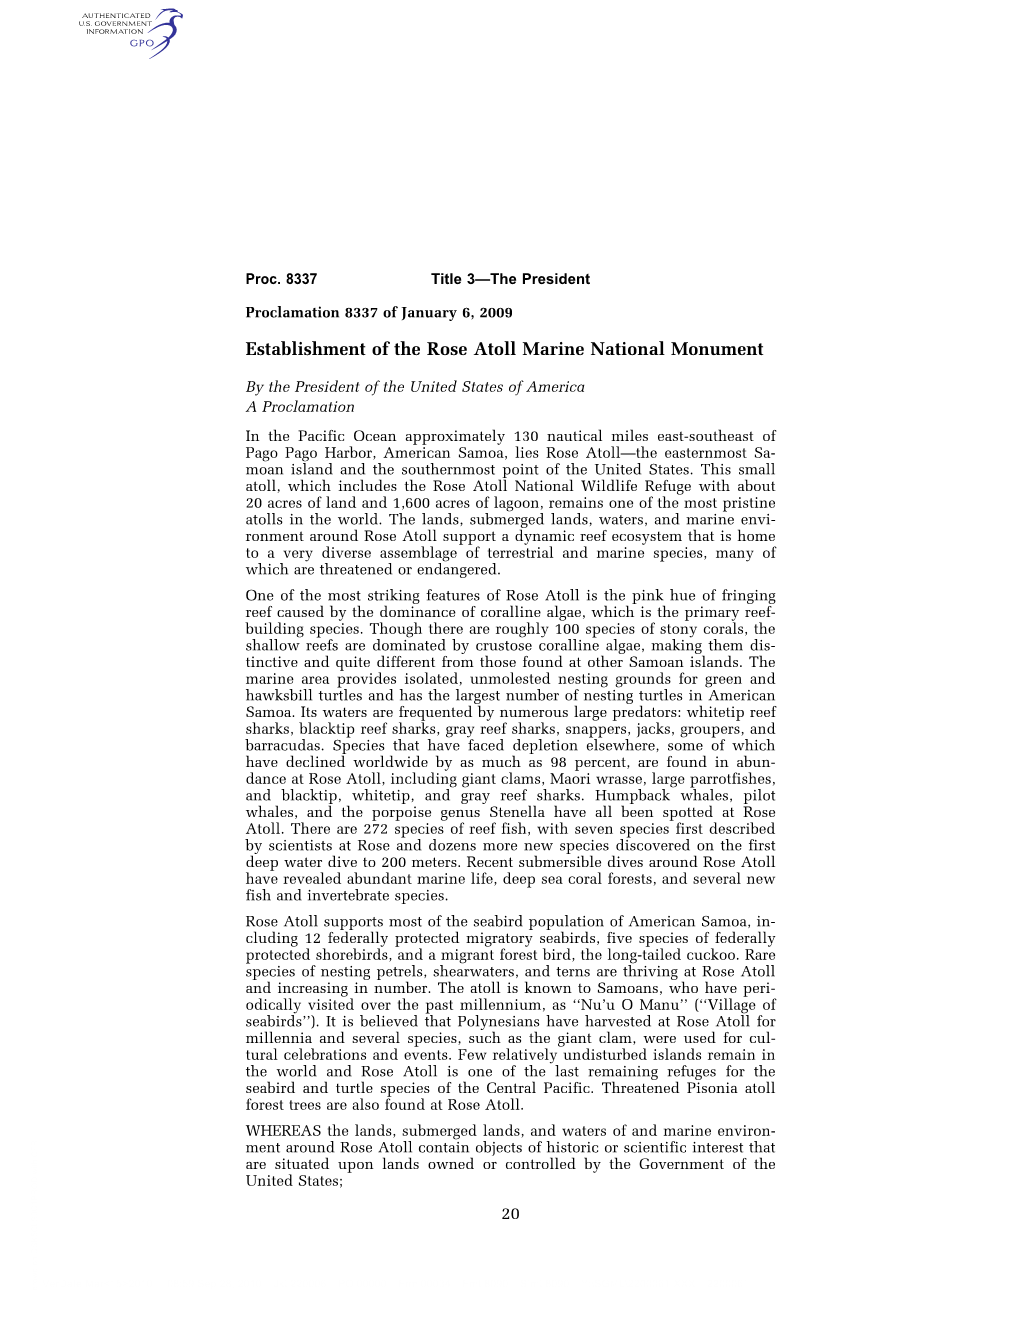 Establishment of the Rose Atoll Marine National Monument